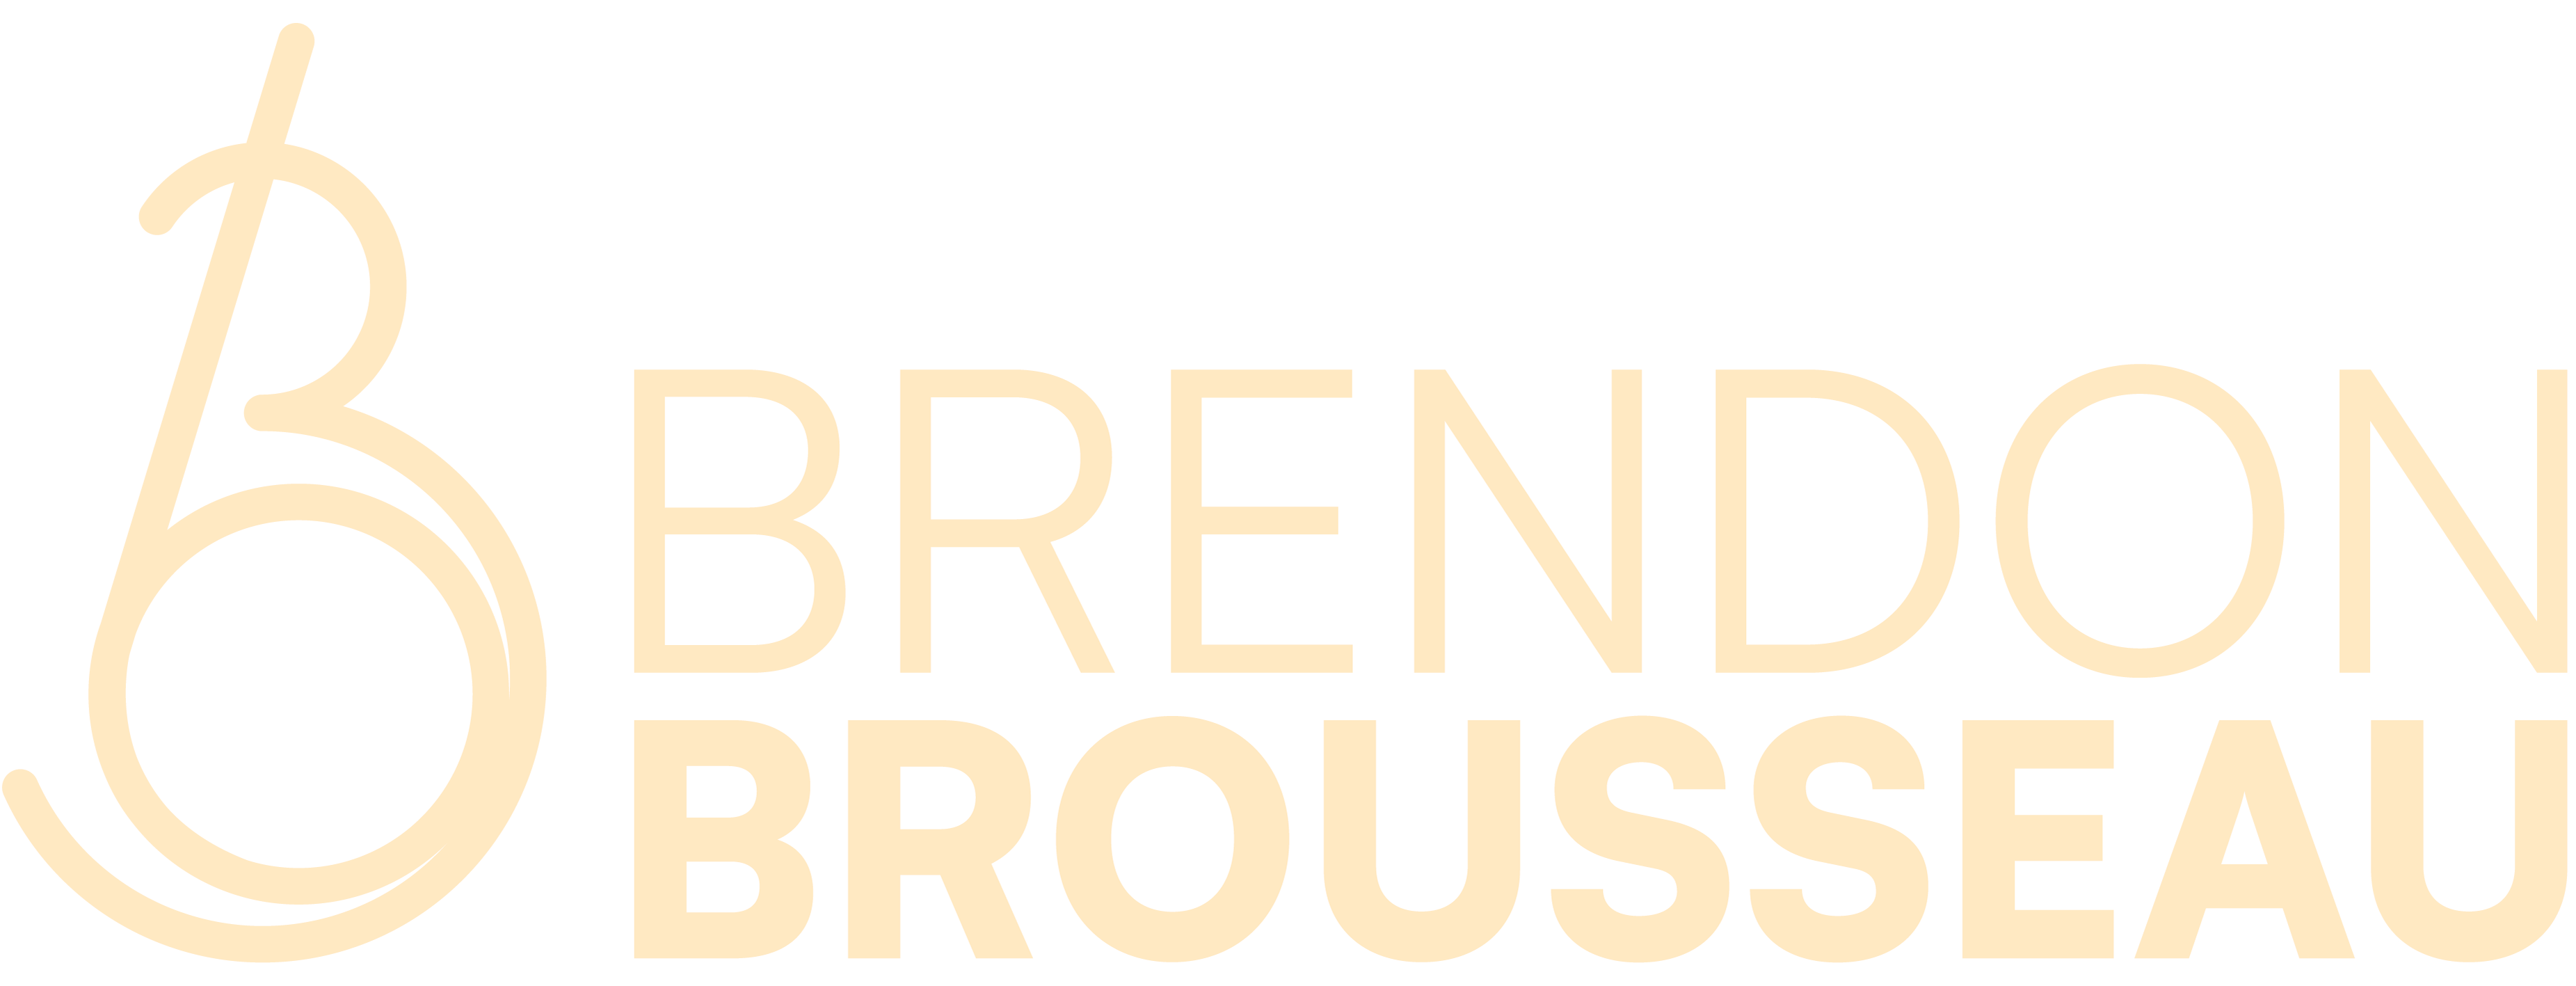 Brendon Brousseau